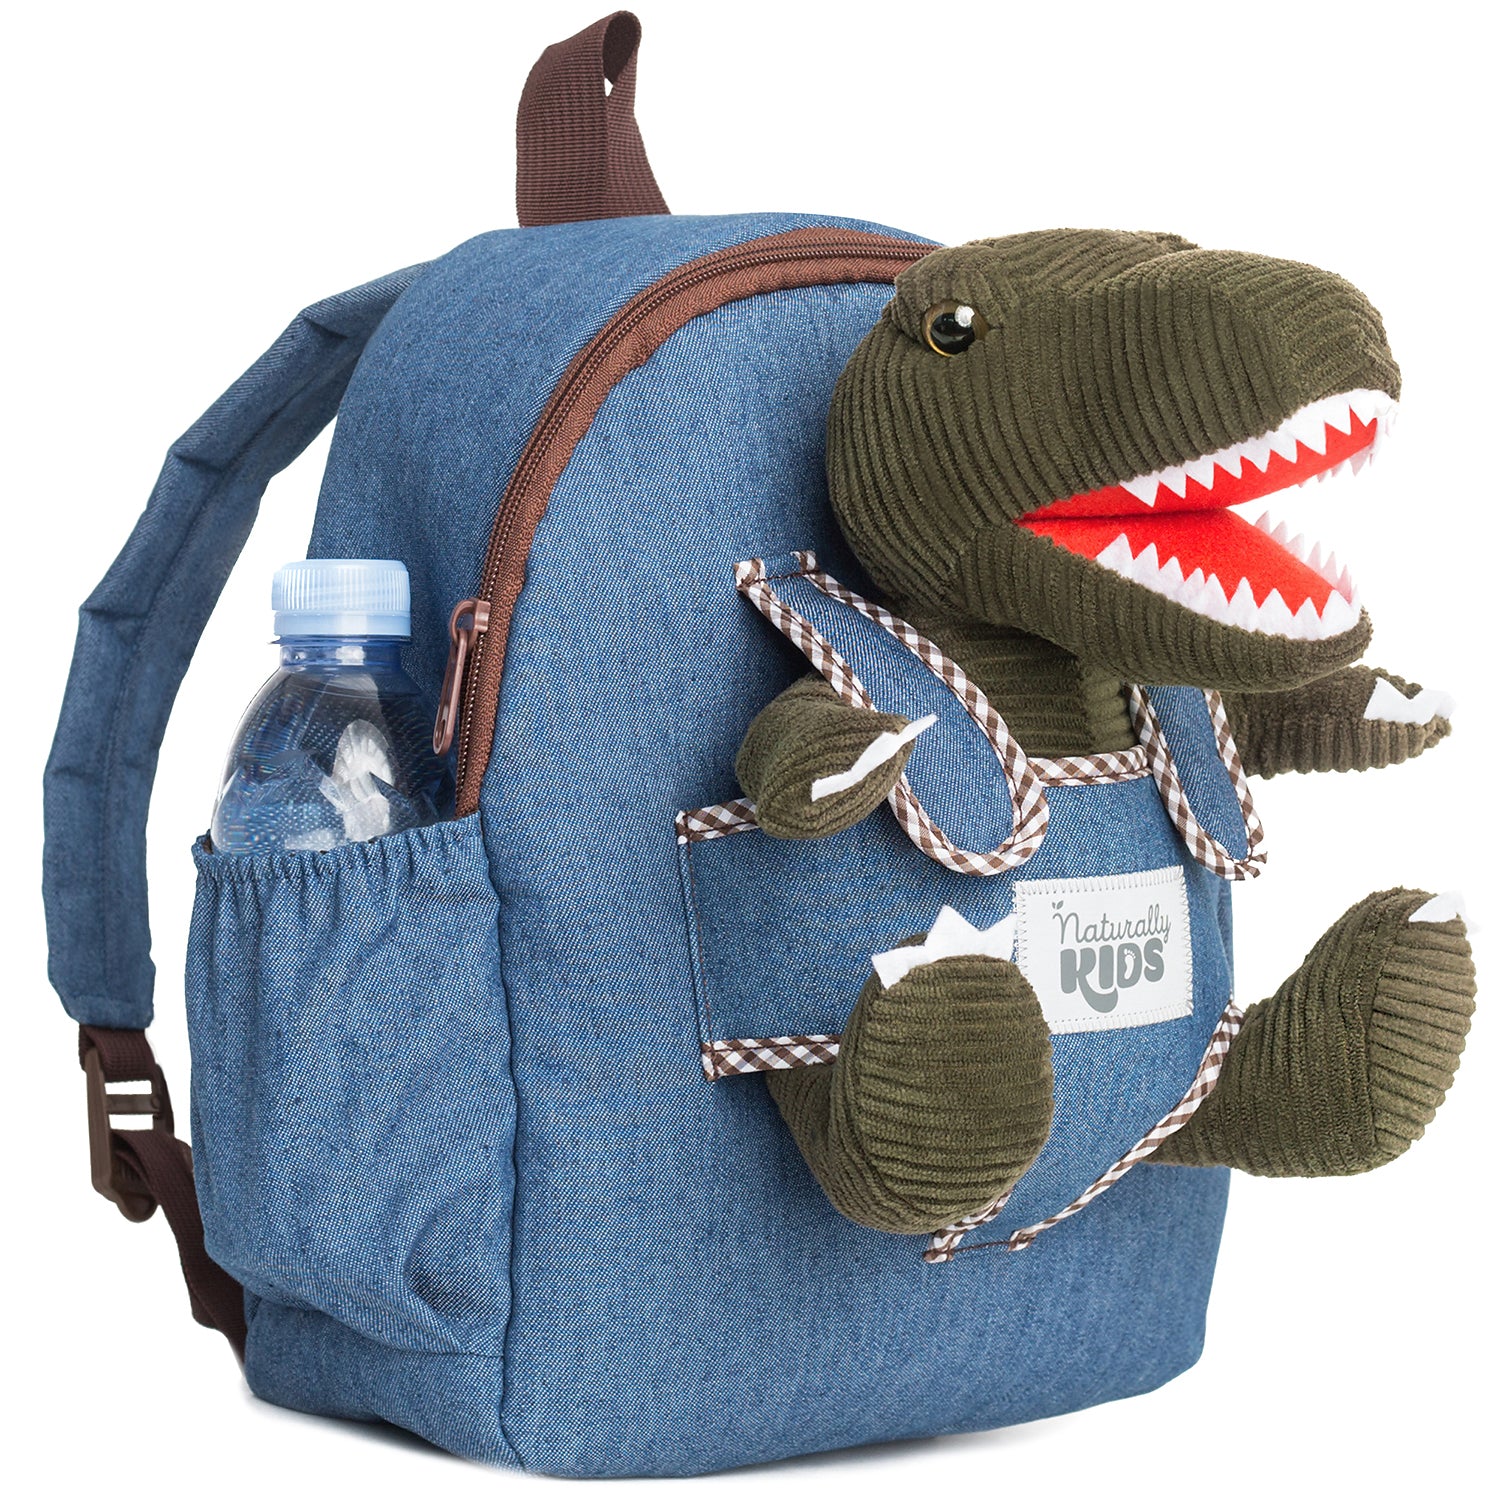 Jurassic Dinosaur Kids Backpacks, Personalised Dinosaur Backpacks